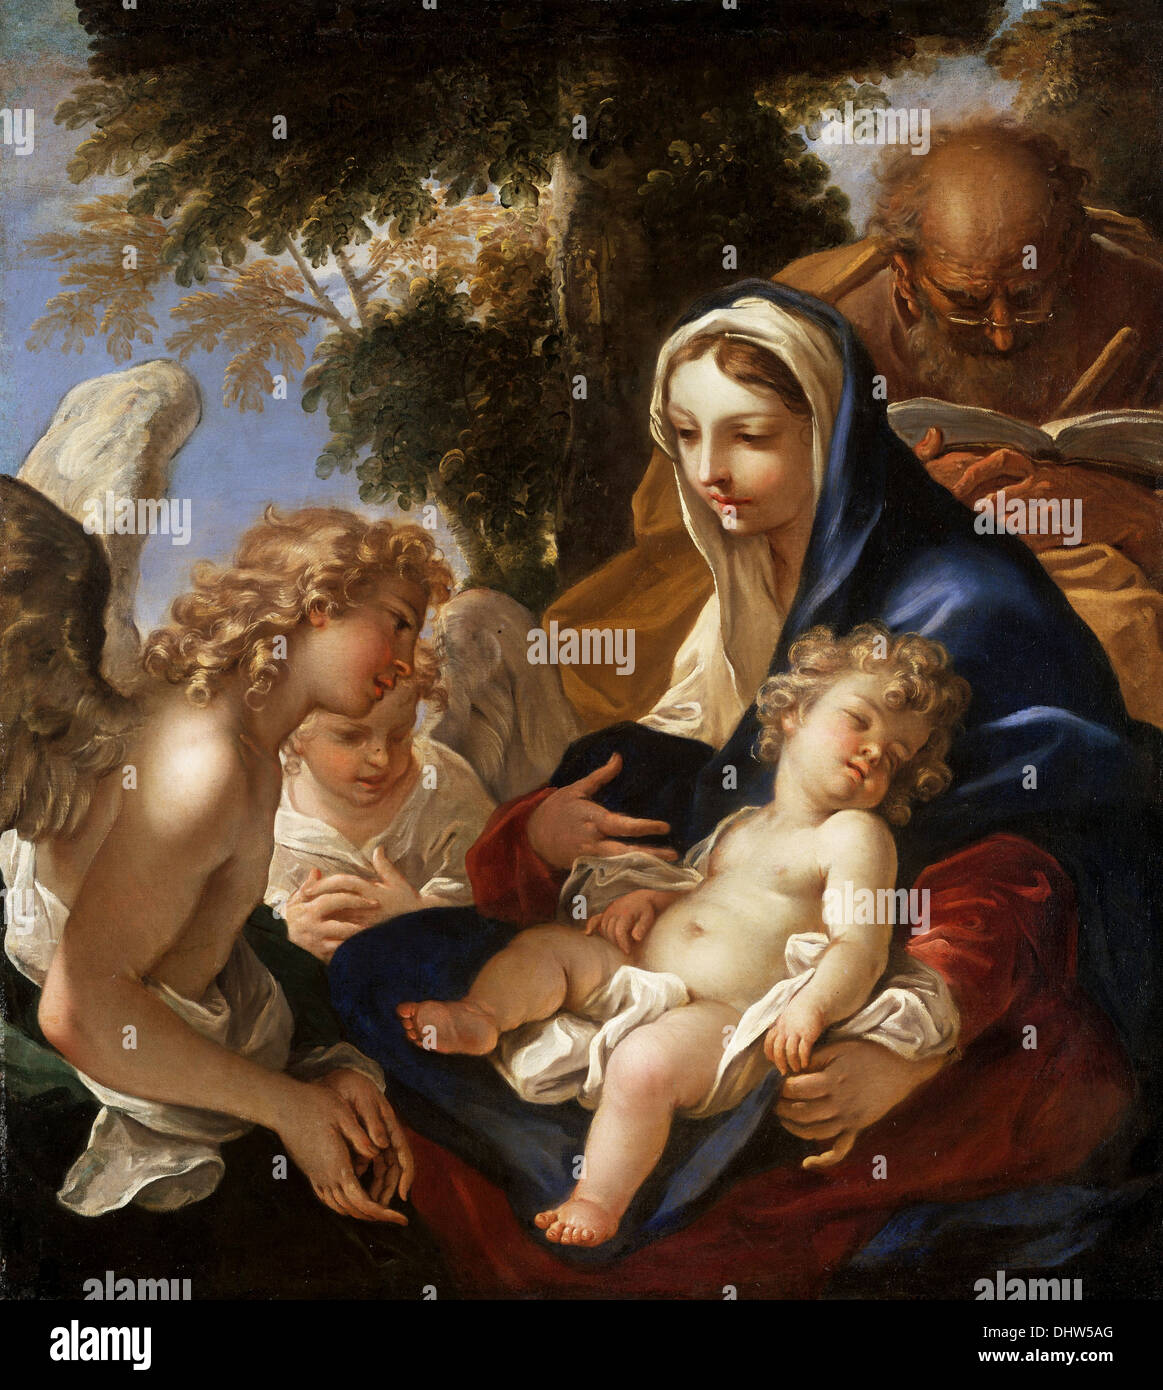 The Holy Family with Angels - by Sebastiano Ricci, 1700 Stock Photo